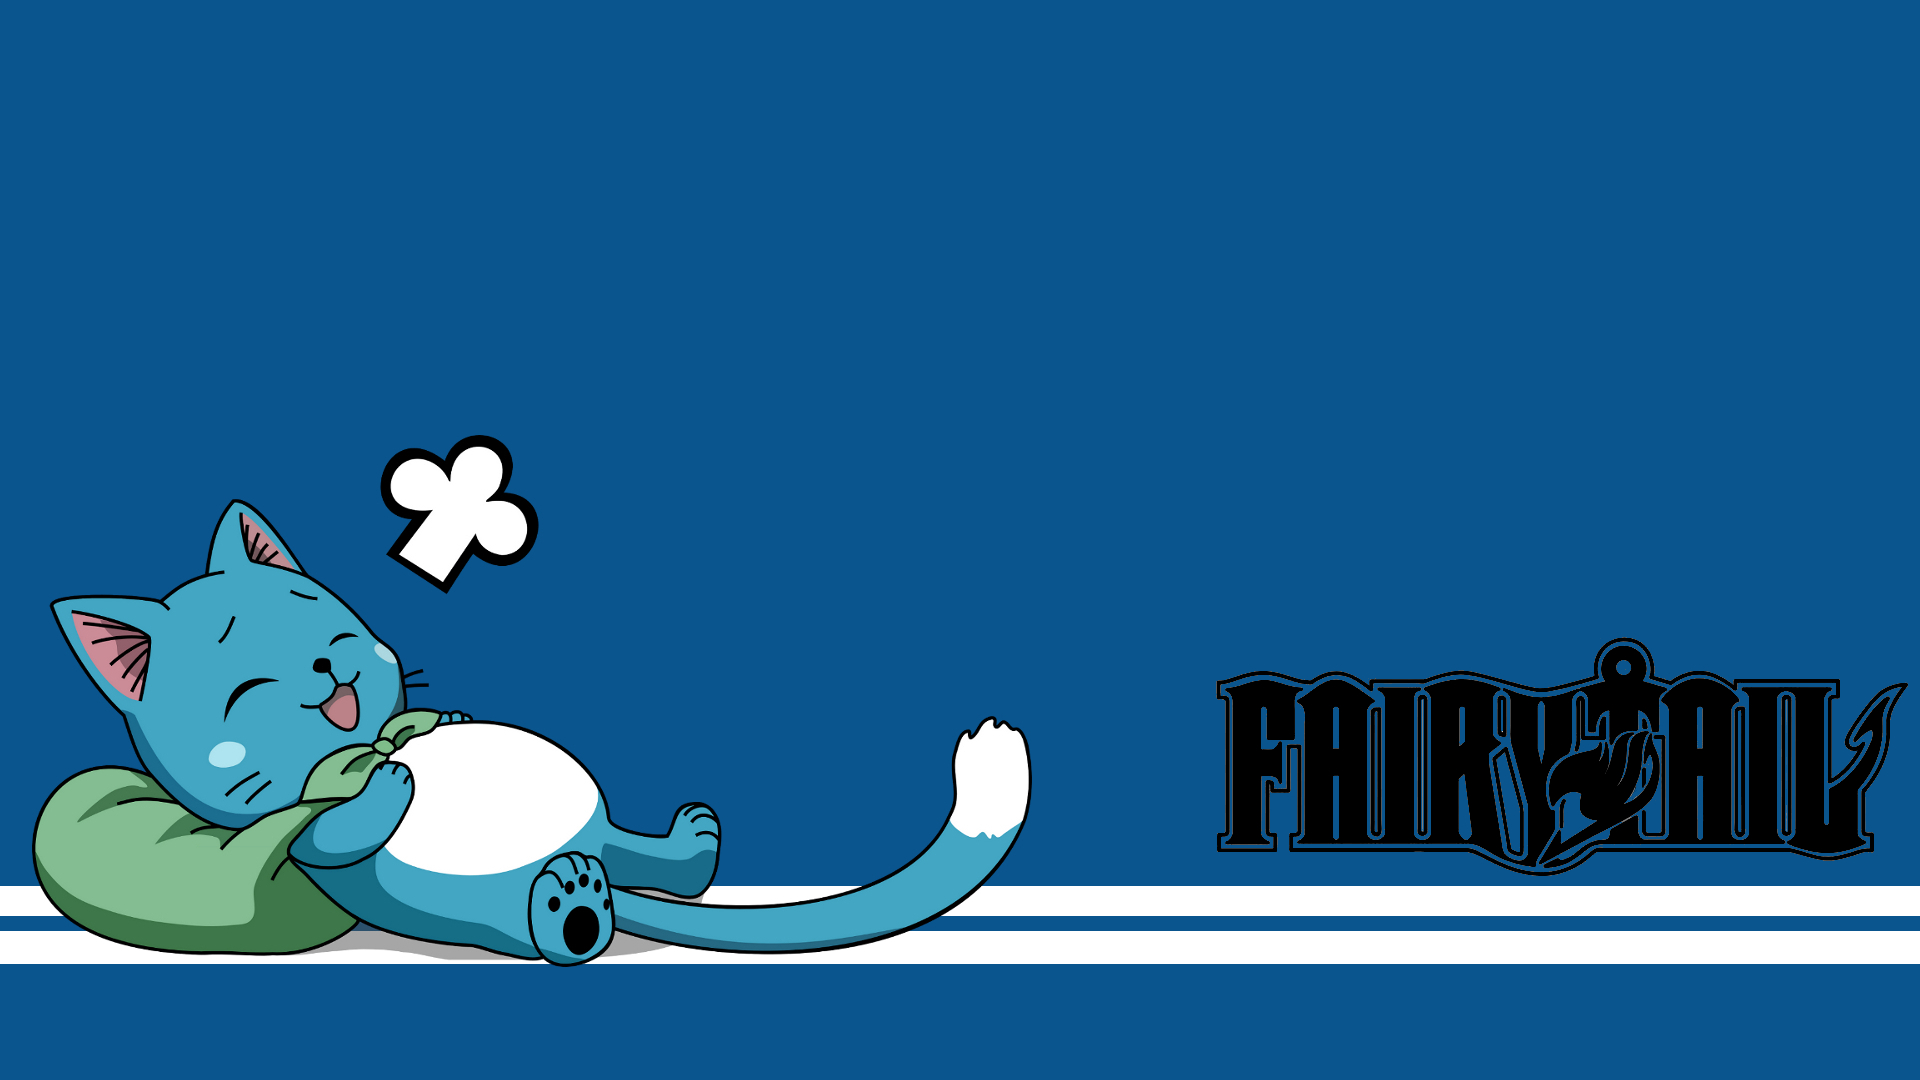 Fairy Tail Happy Wallpapers Free : Anime Wallpaper - Kokean.com